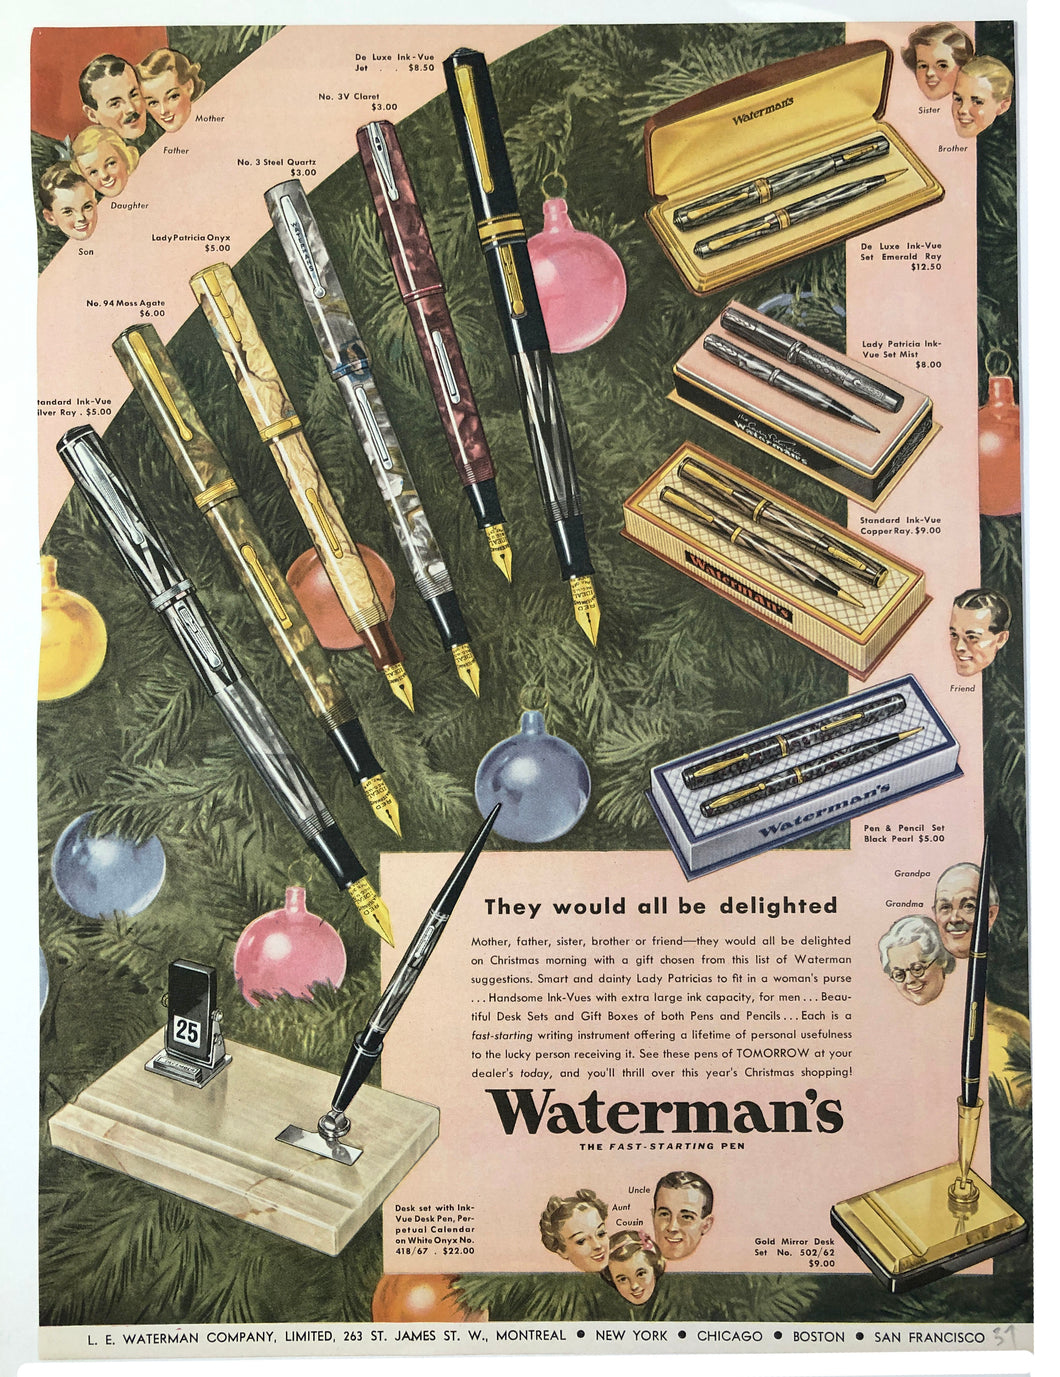 Waterman's, Chatelaine, December, 1937